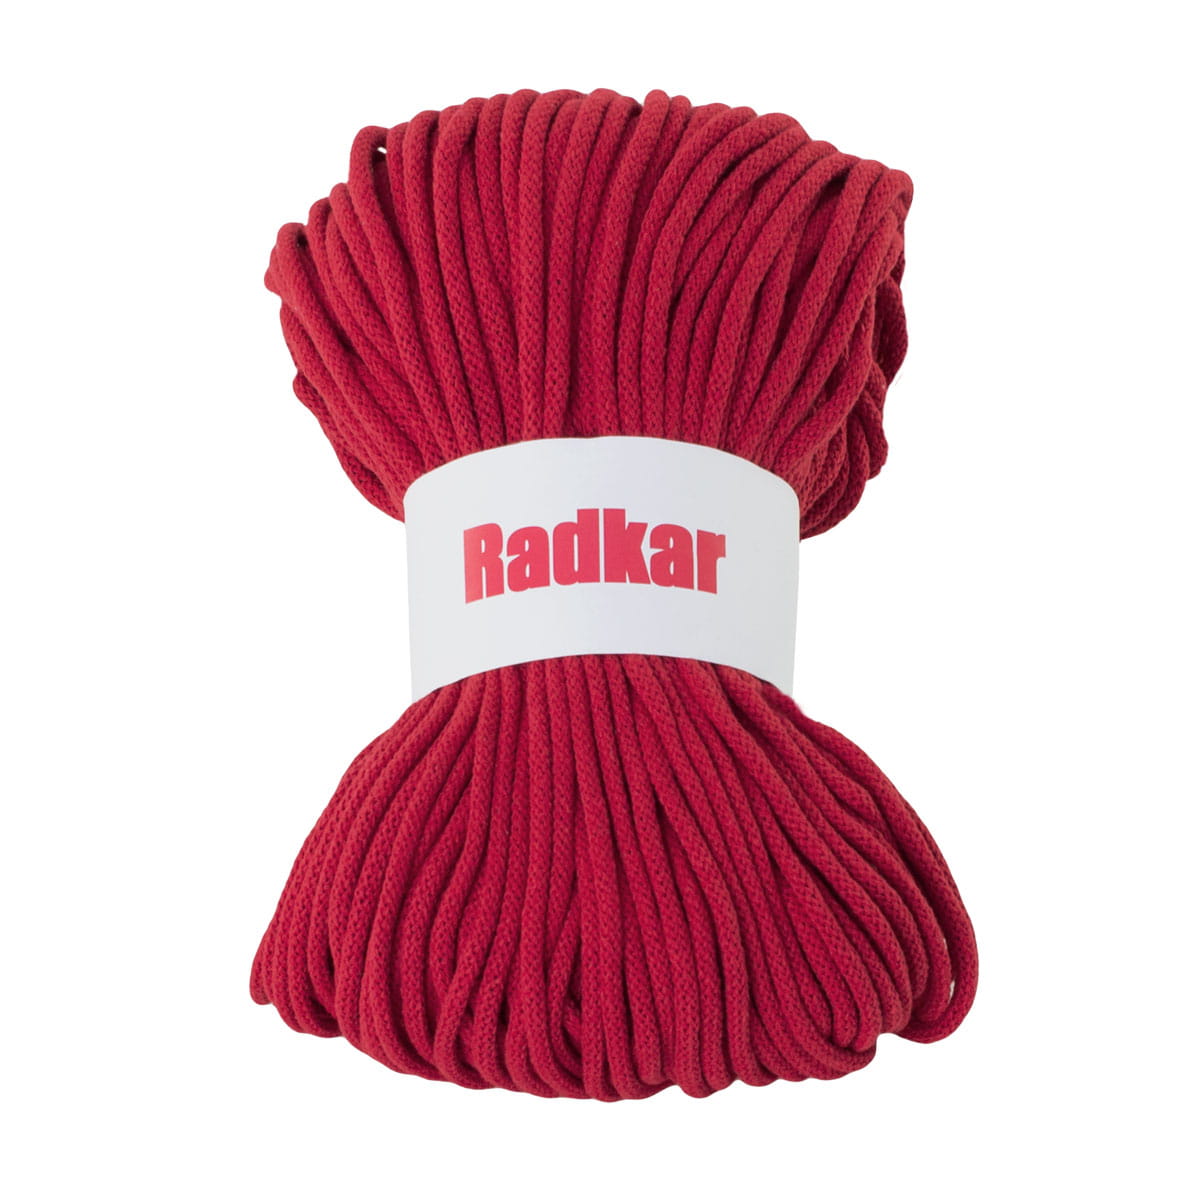 5mm coton cord red macrame braided with core radkar crochettig knitting DIY